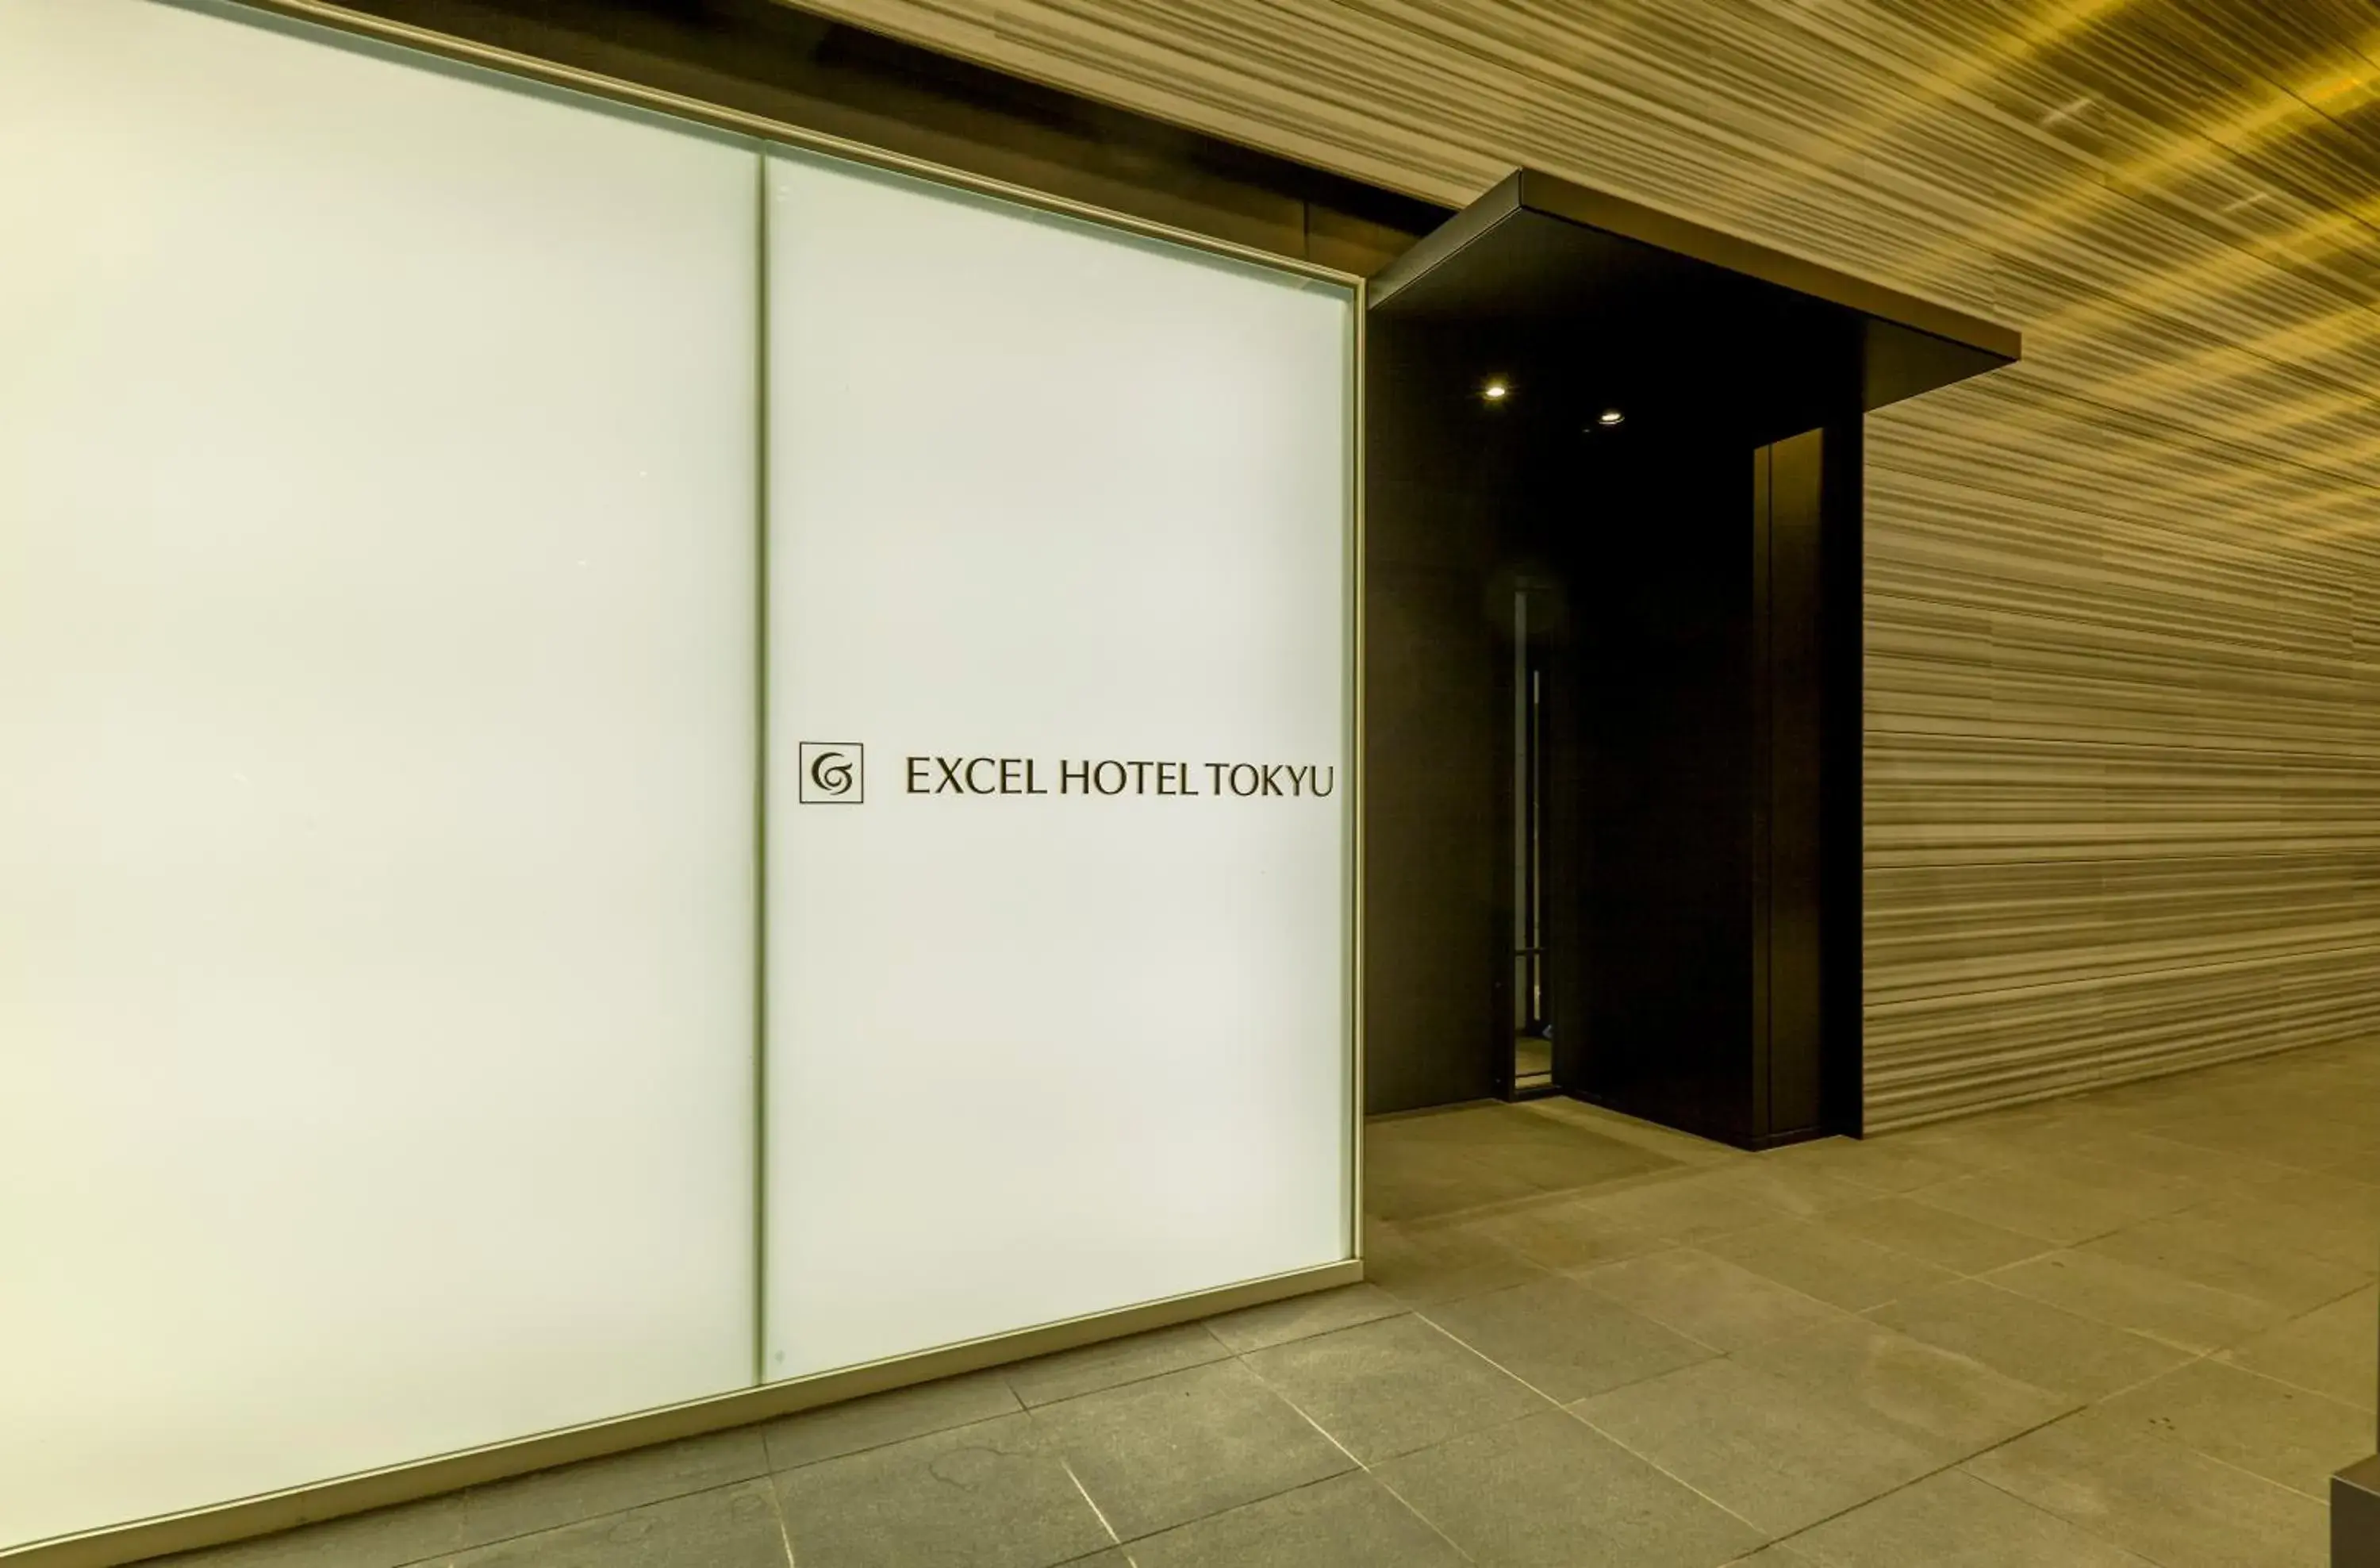 Property logo or sign, Facade/Entrance in Futakotamagawa Excel Hotel Tokyu